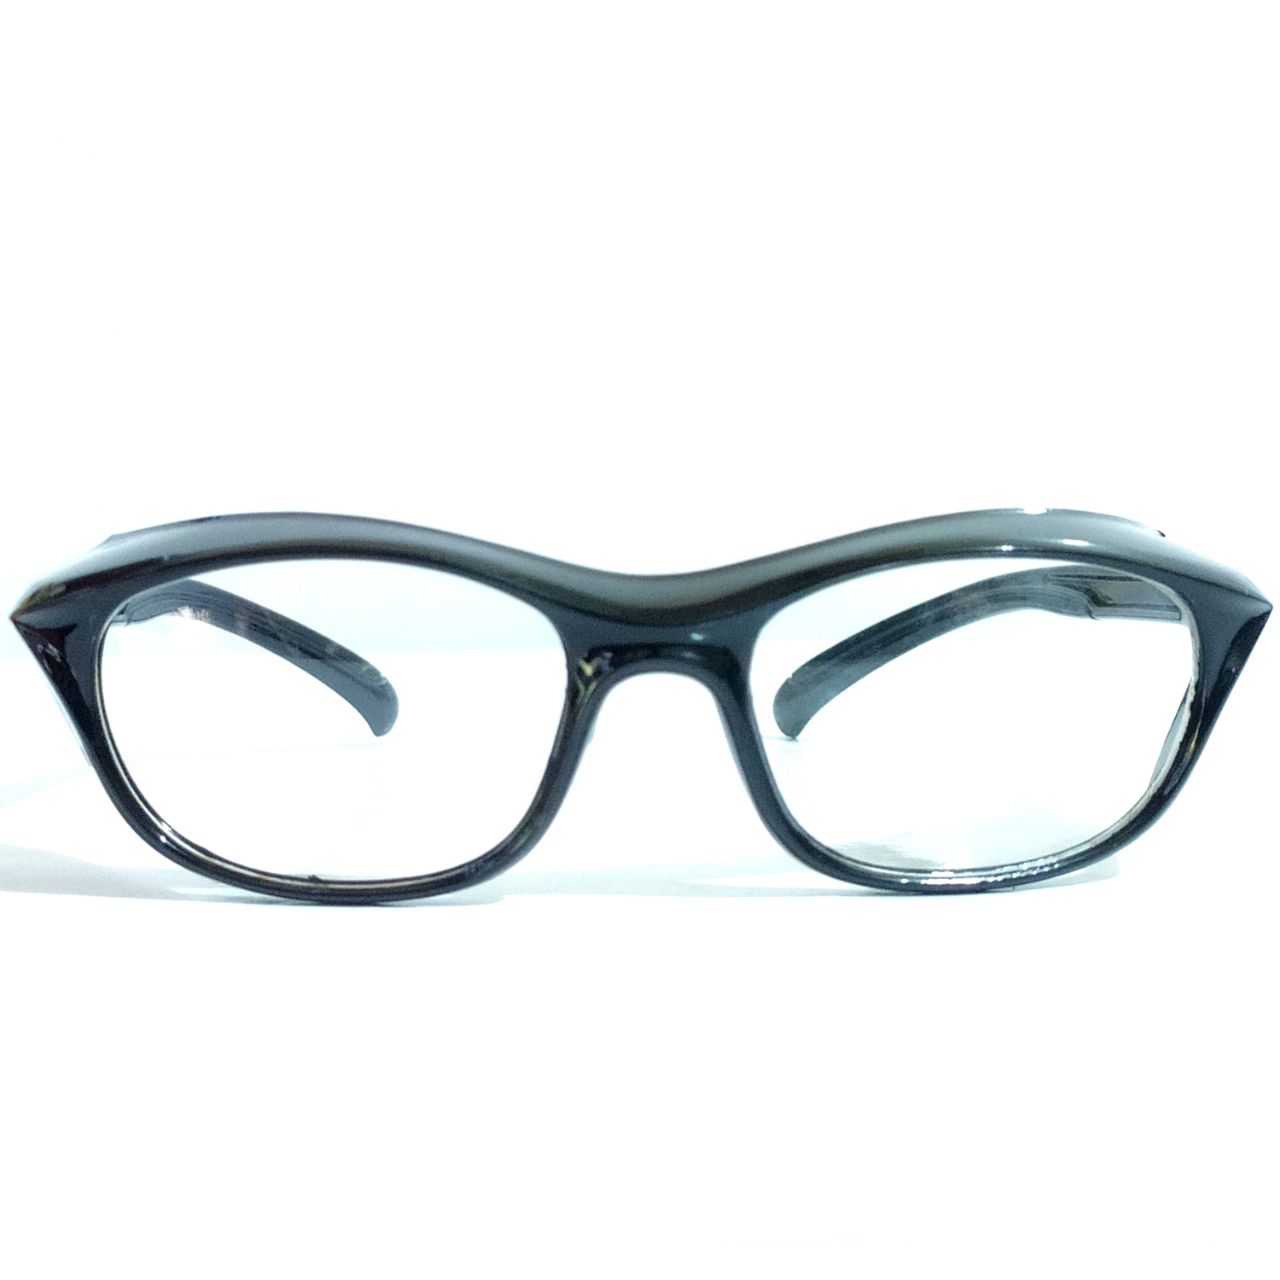 Black Frame Prescription Safety Glasses with Side Shield